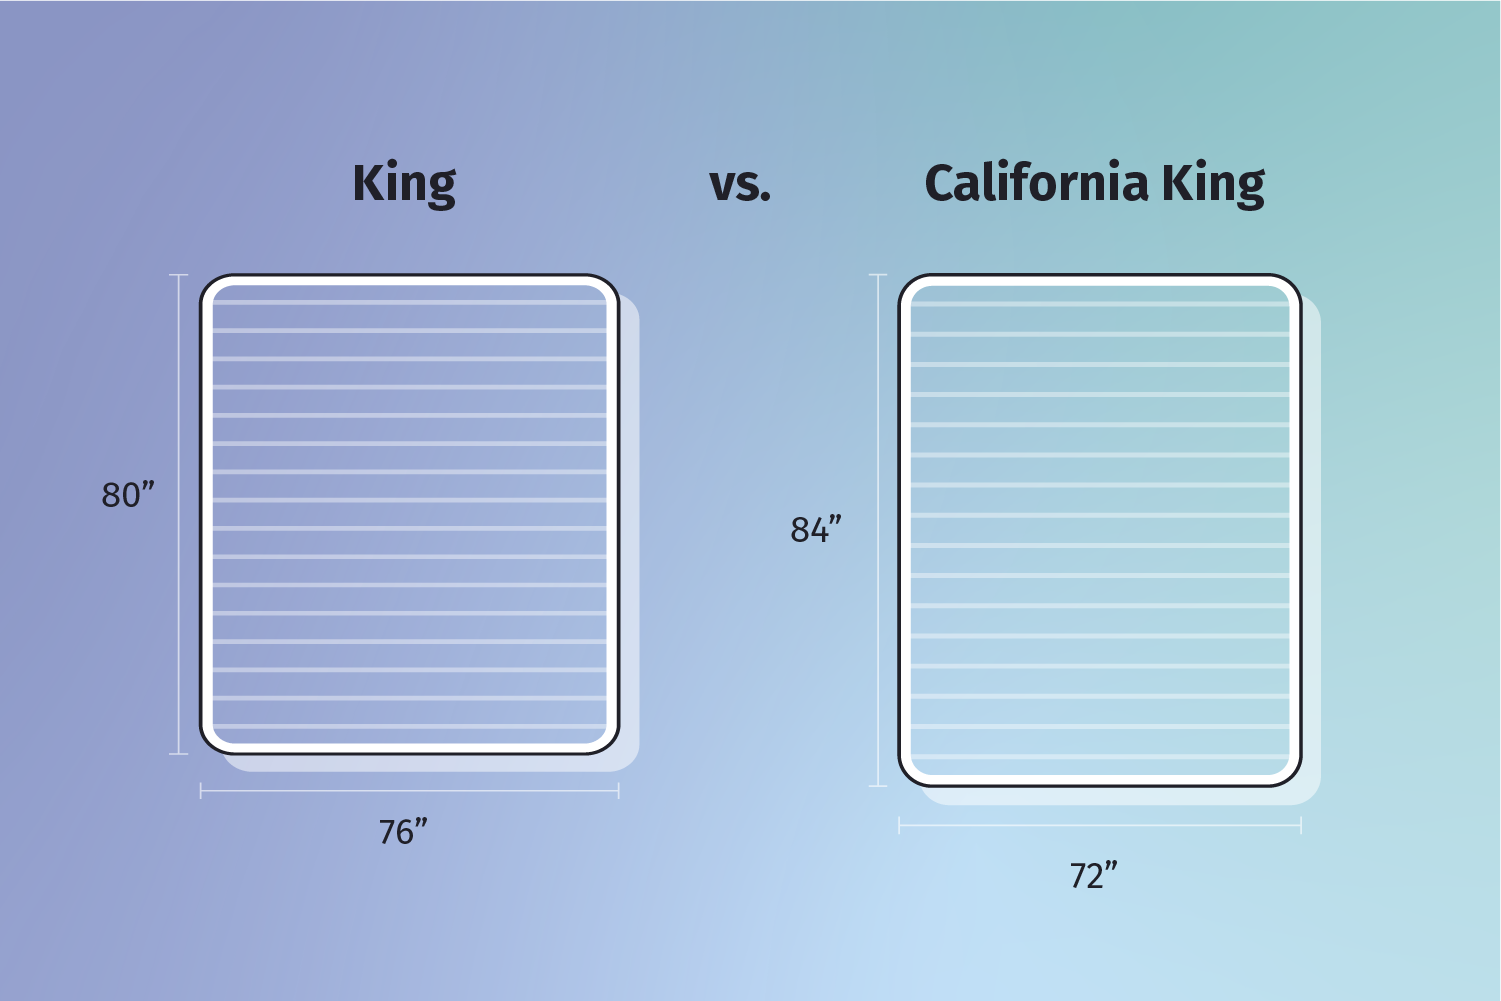 king vs California king mattress size comparison